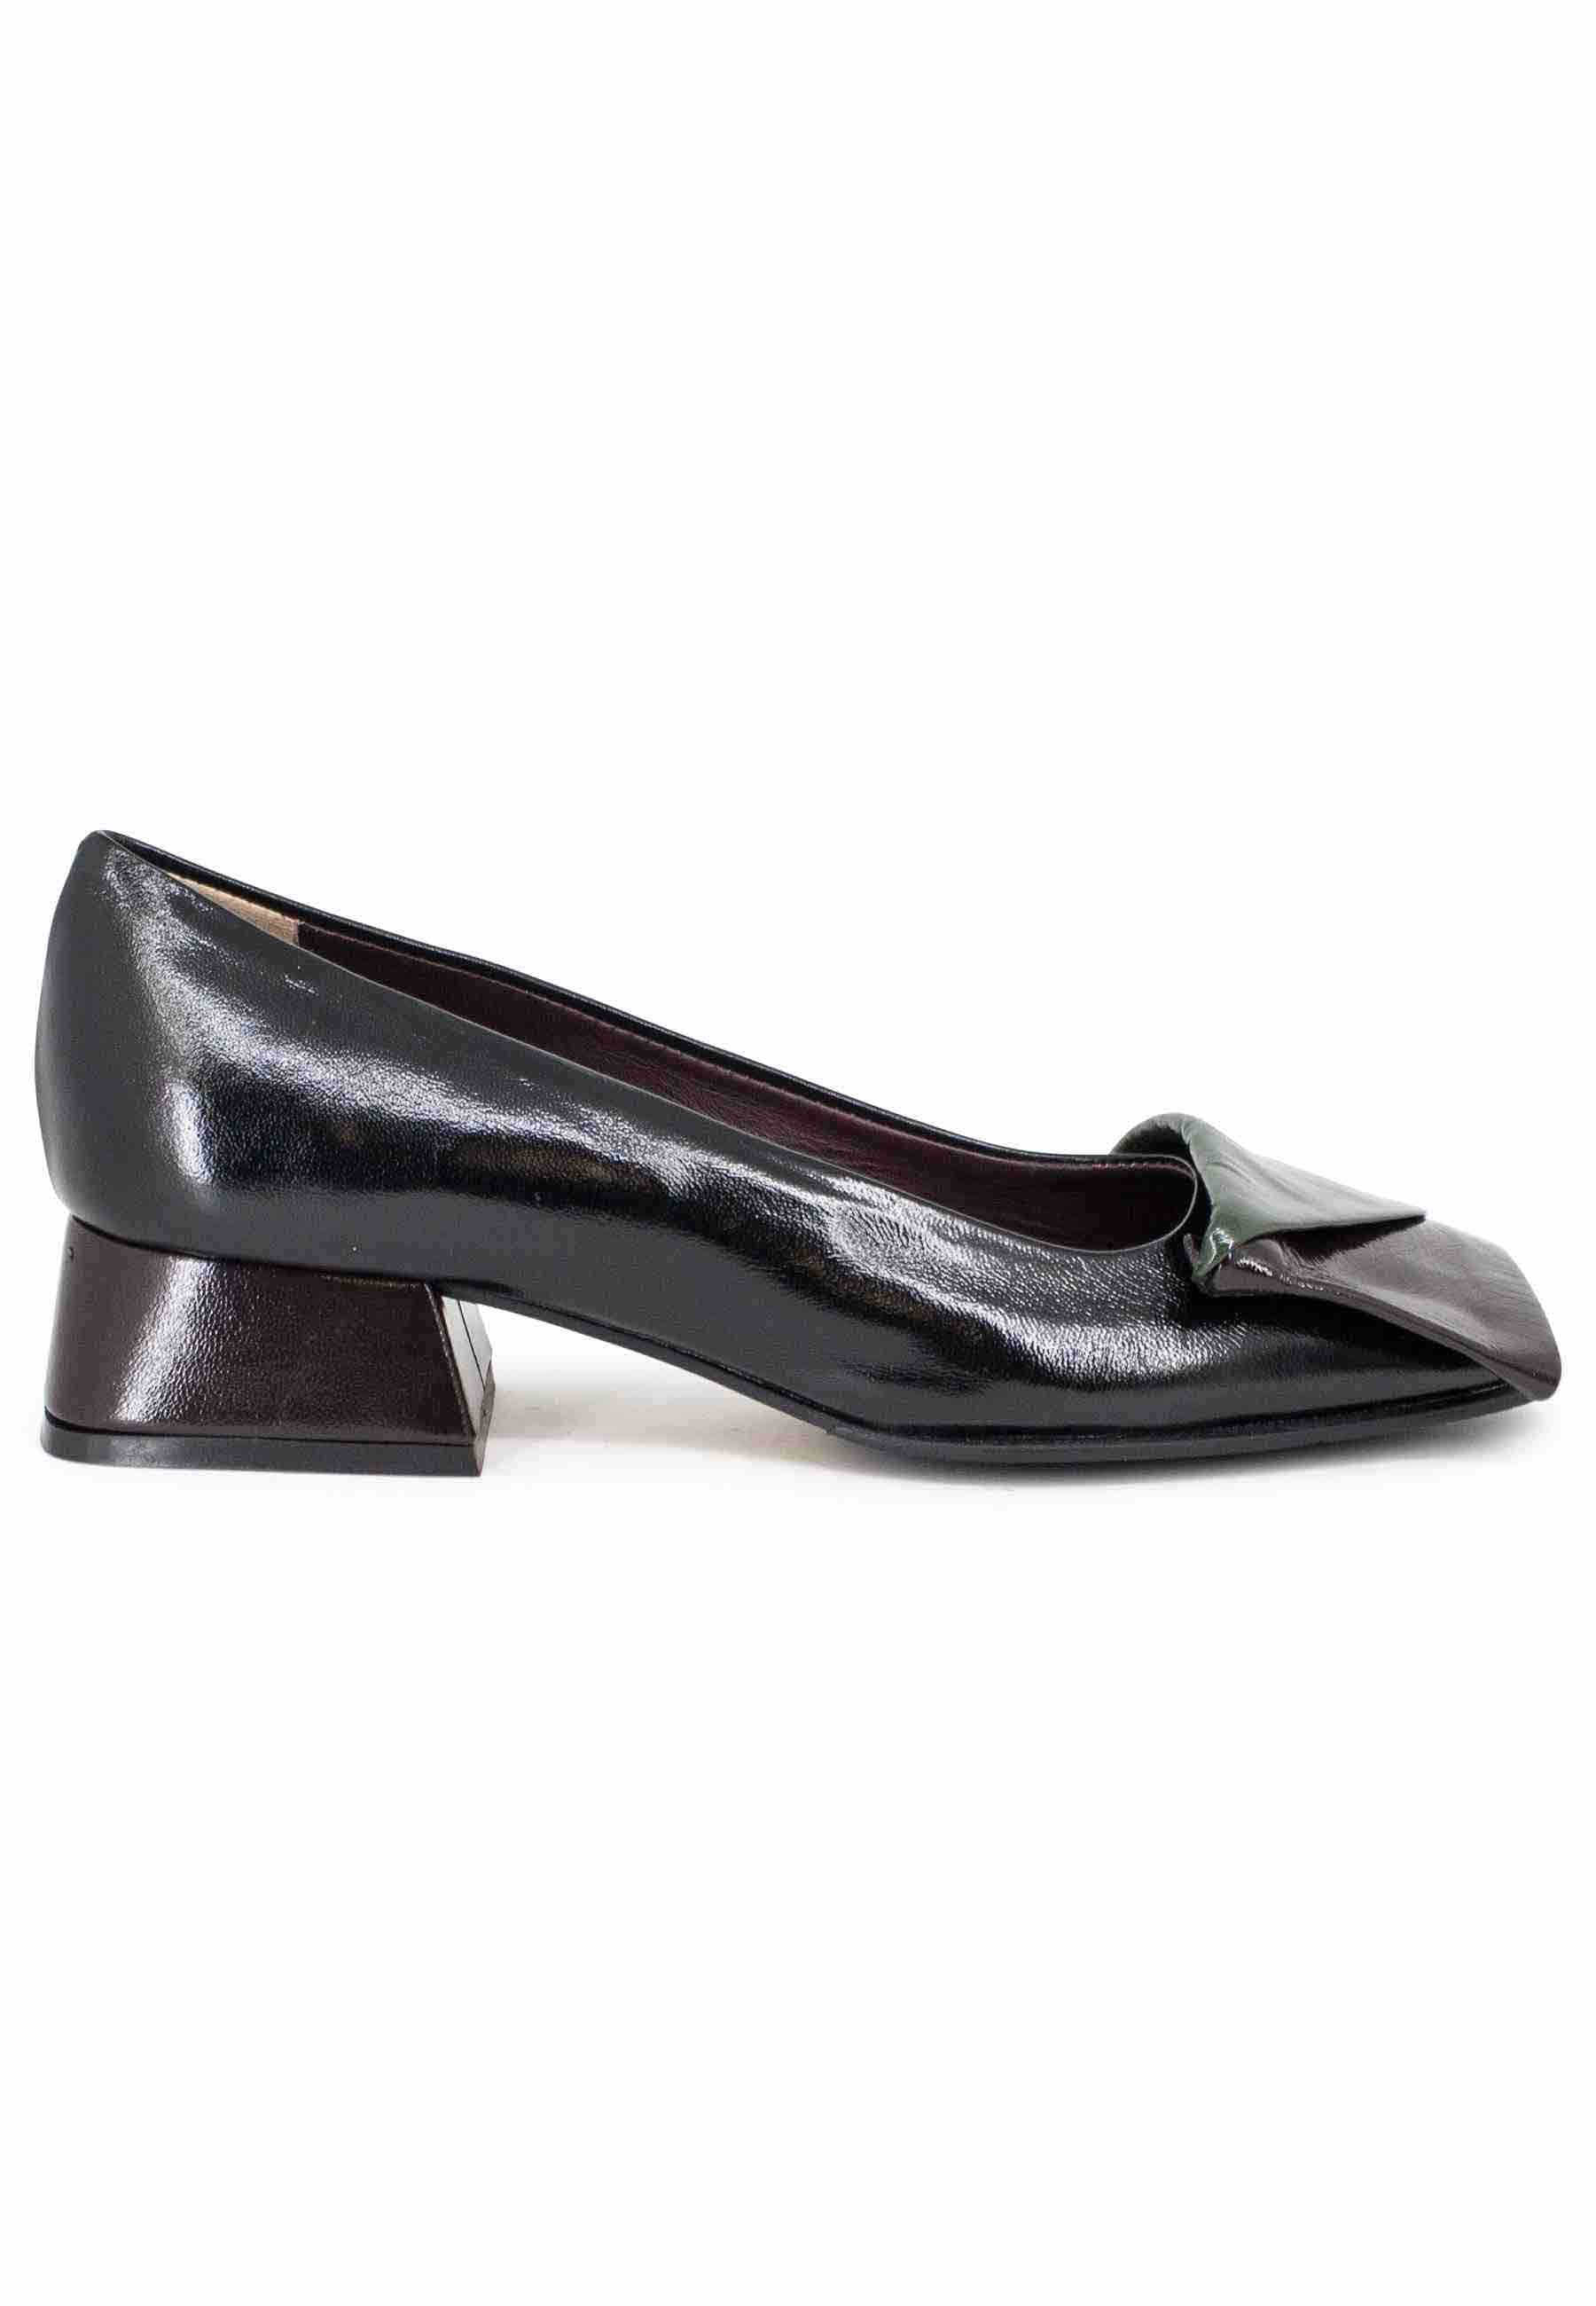 Women's low heel black leather pumps